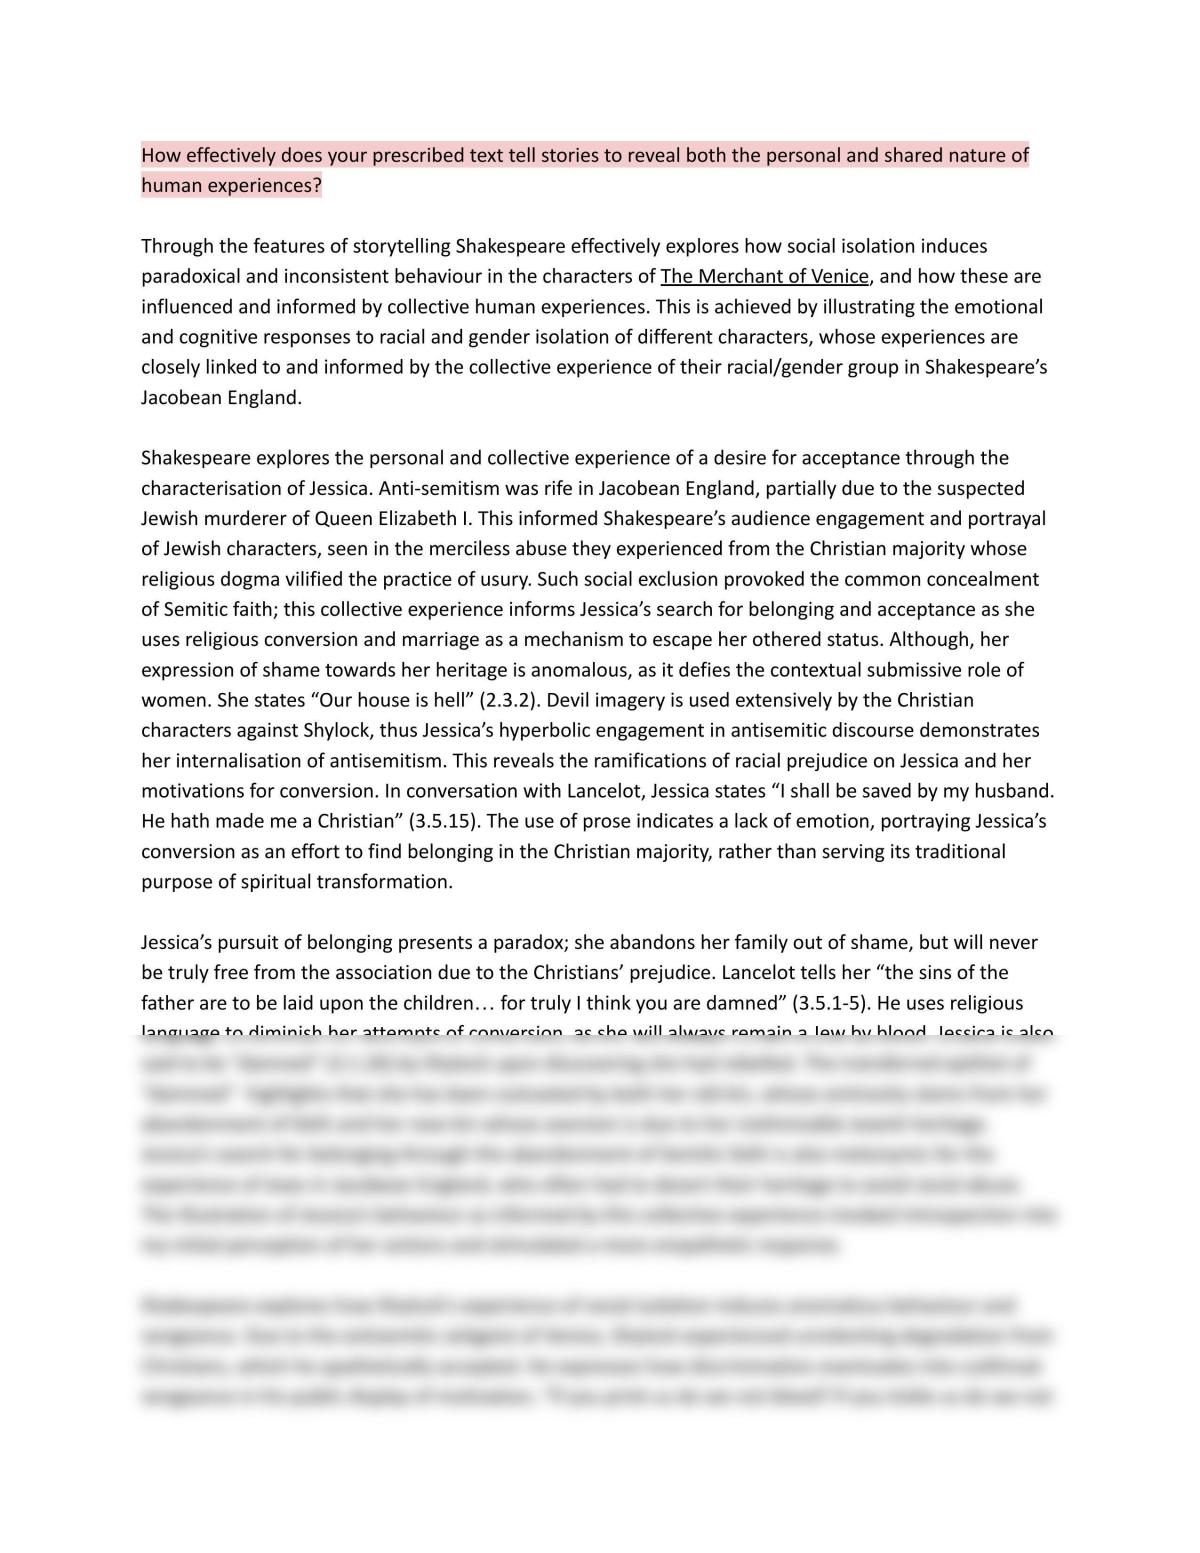 watermark an essay on venice pdf